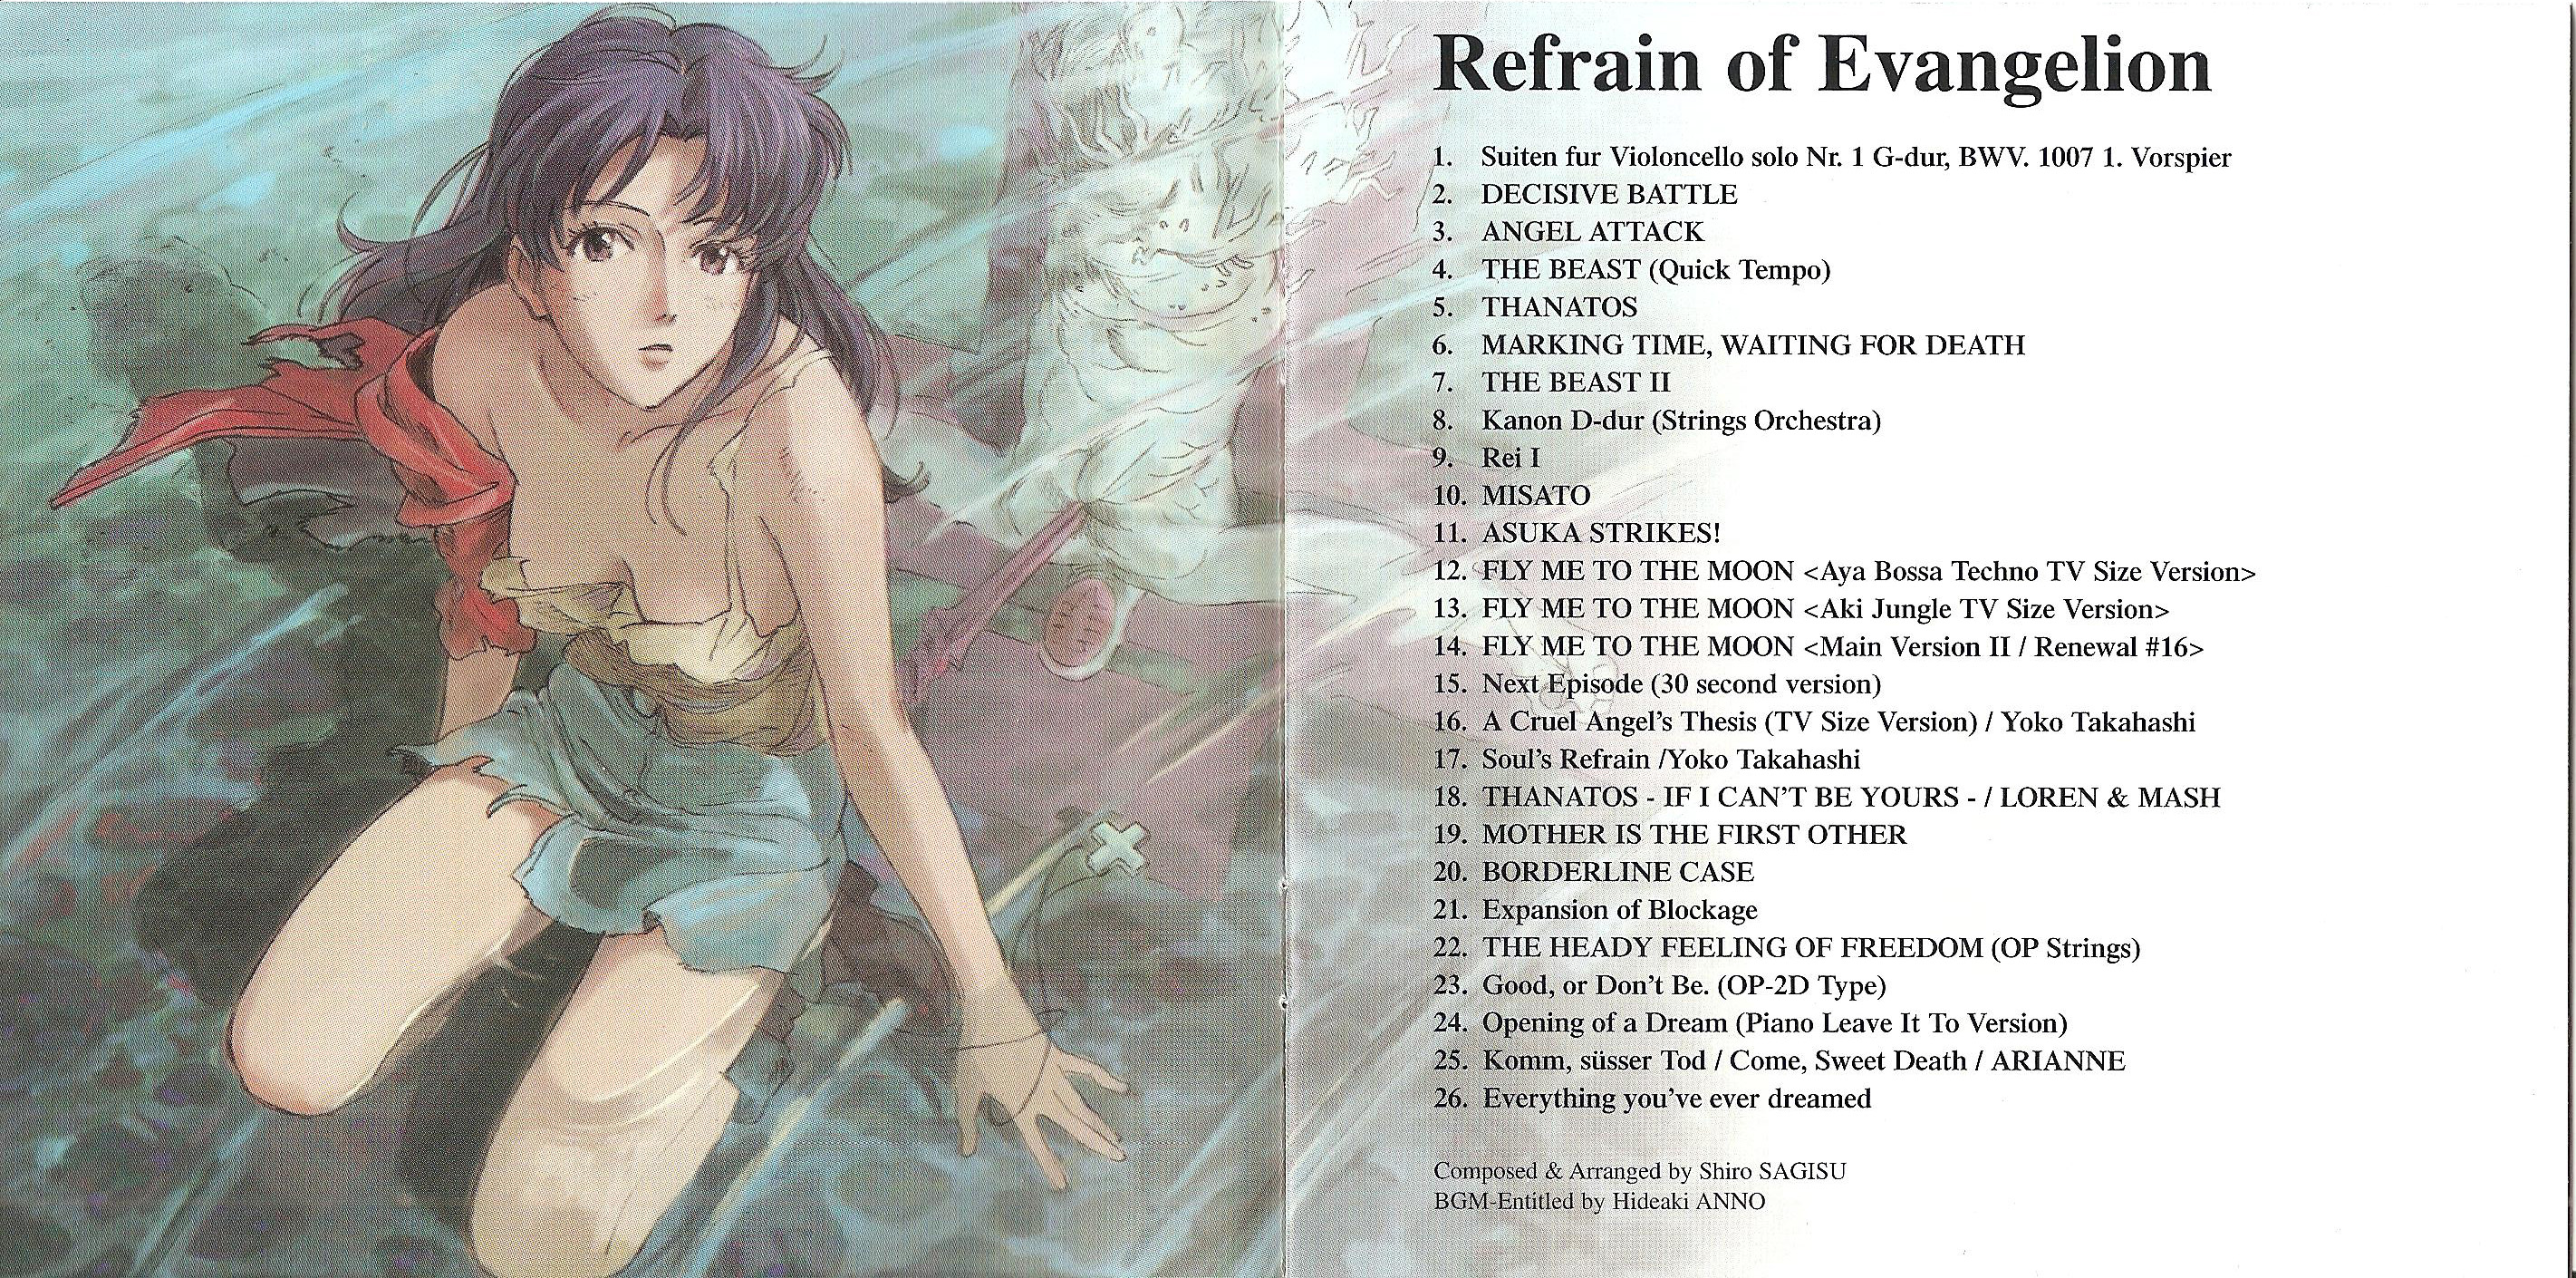 Release “Refrain of Evangelion” by Shiro Sagisu - Cover Art 